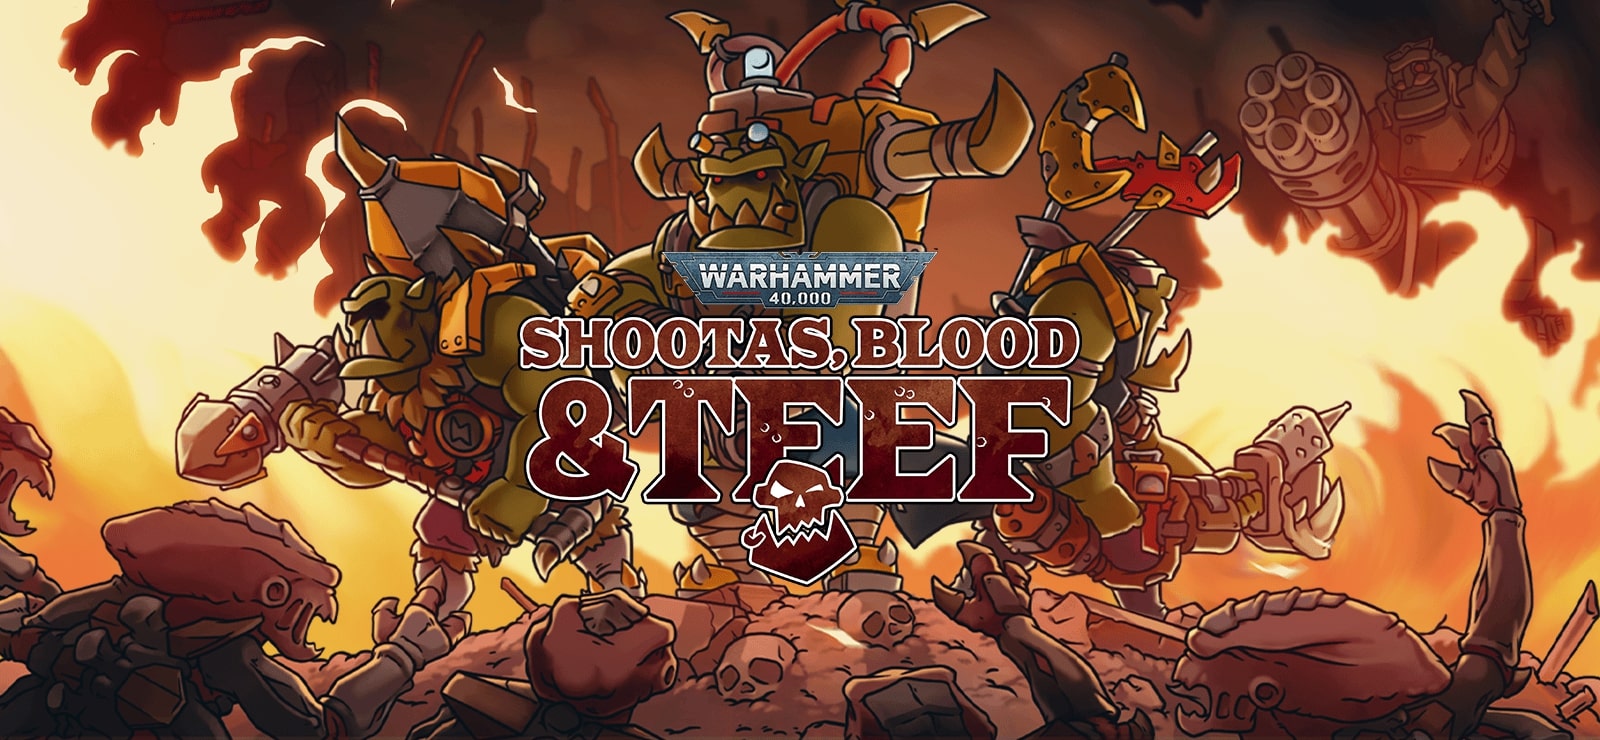 Warhammer 40,000 Shootas, Blood & Teef - Cover